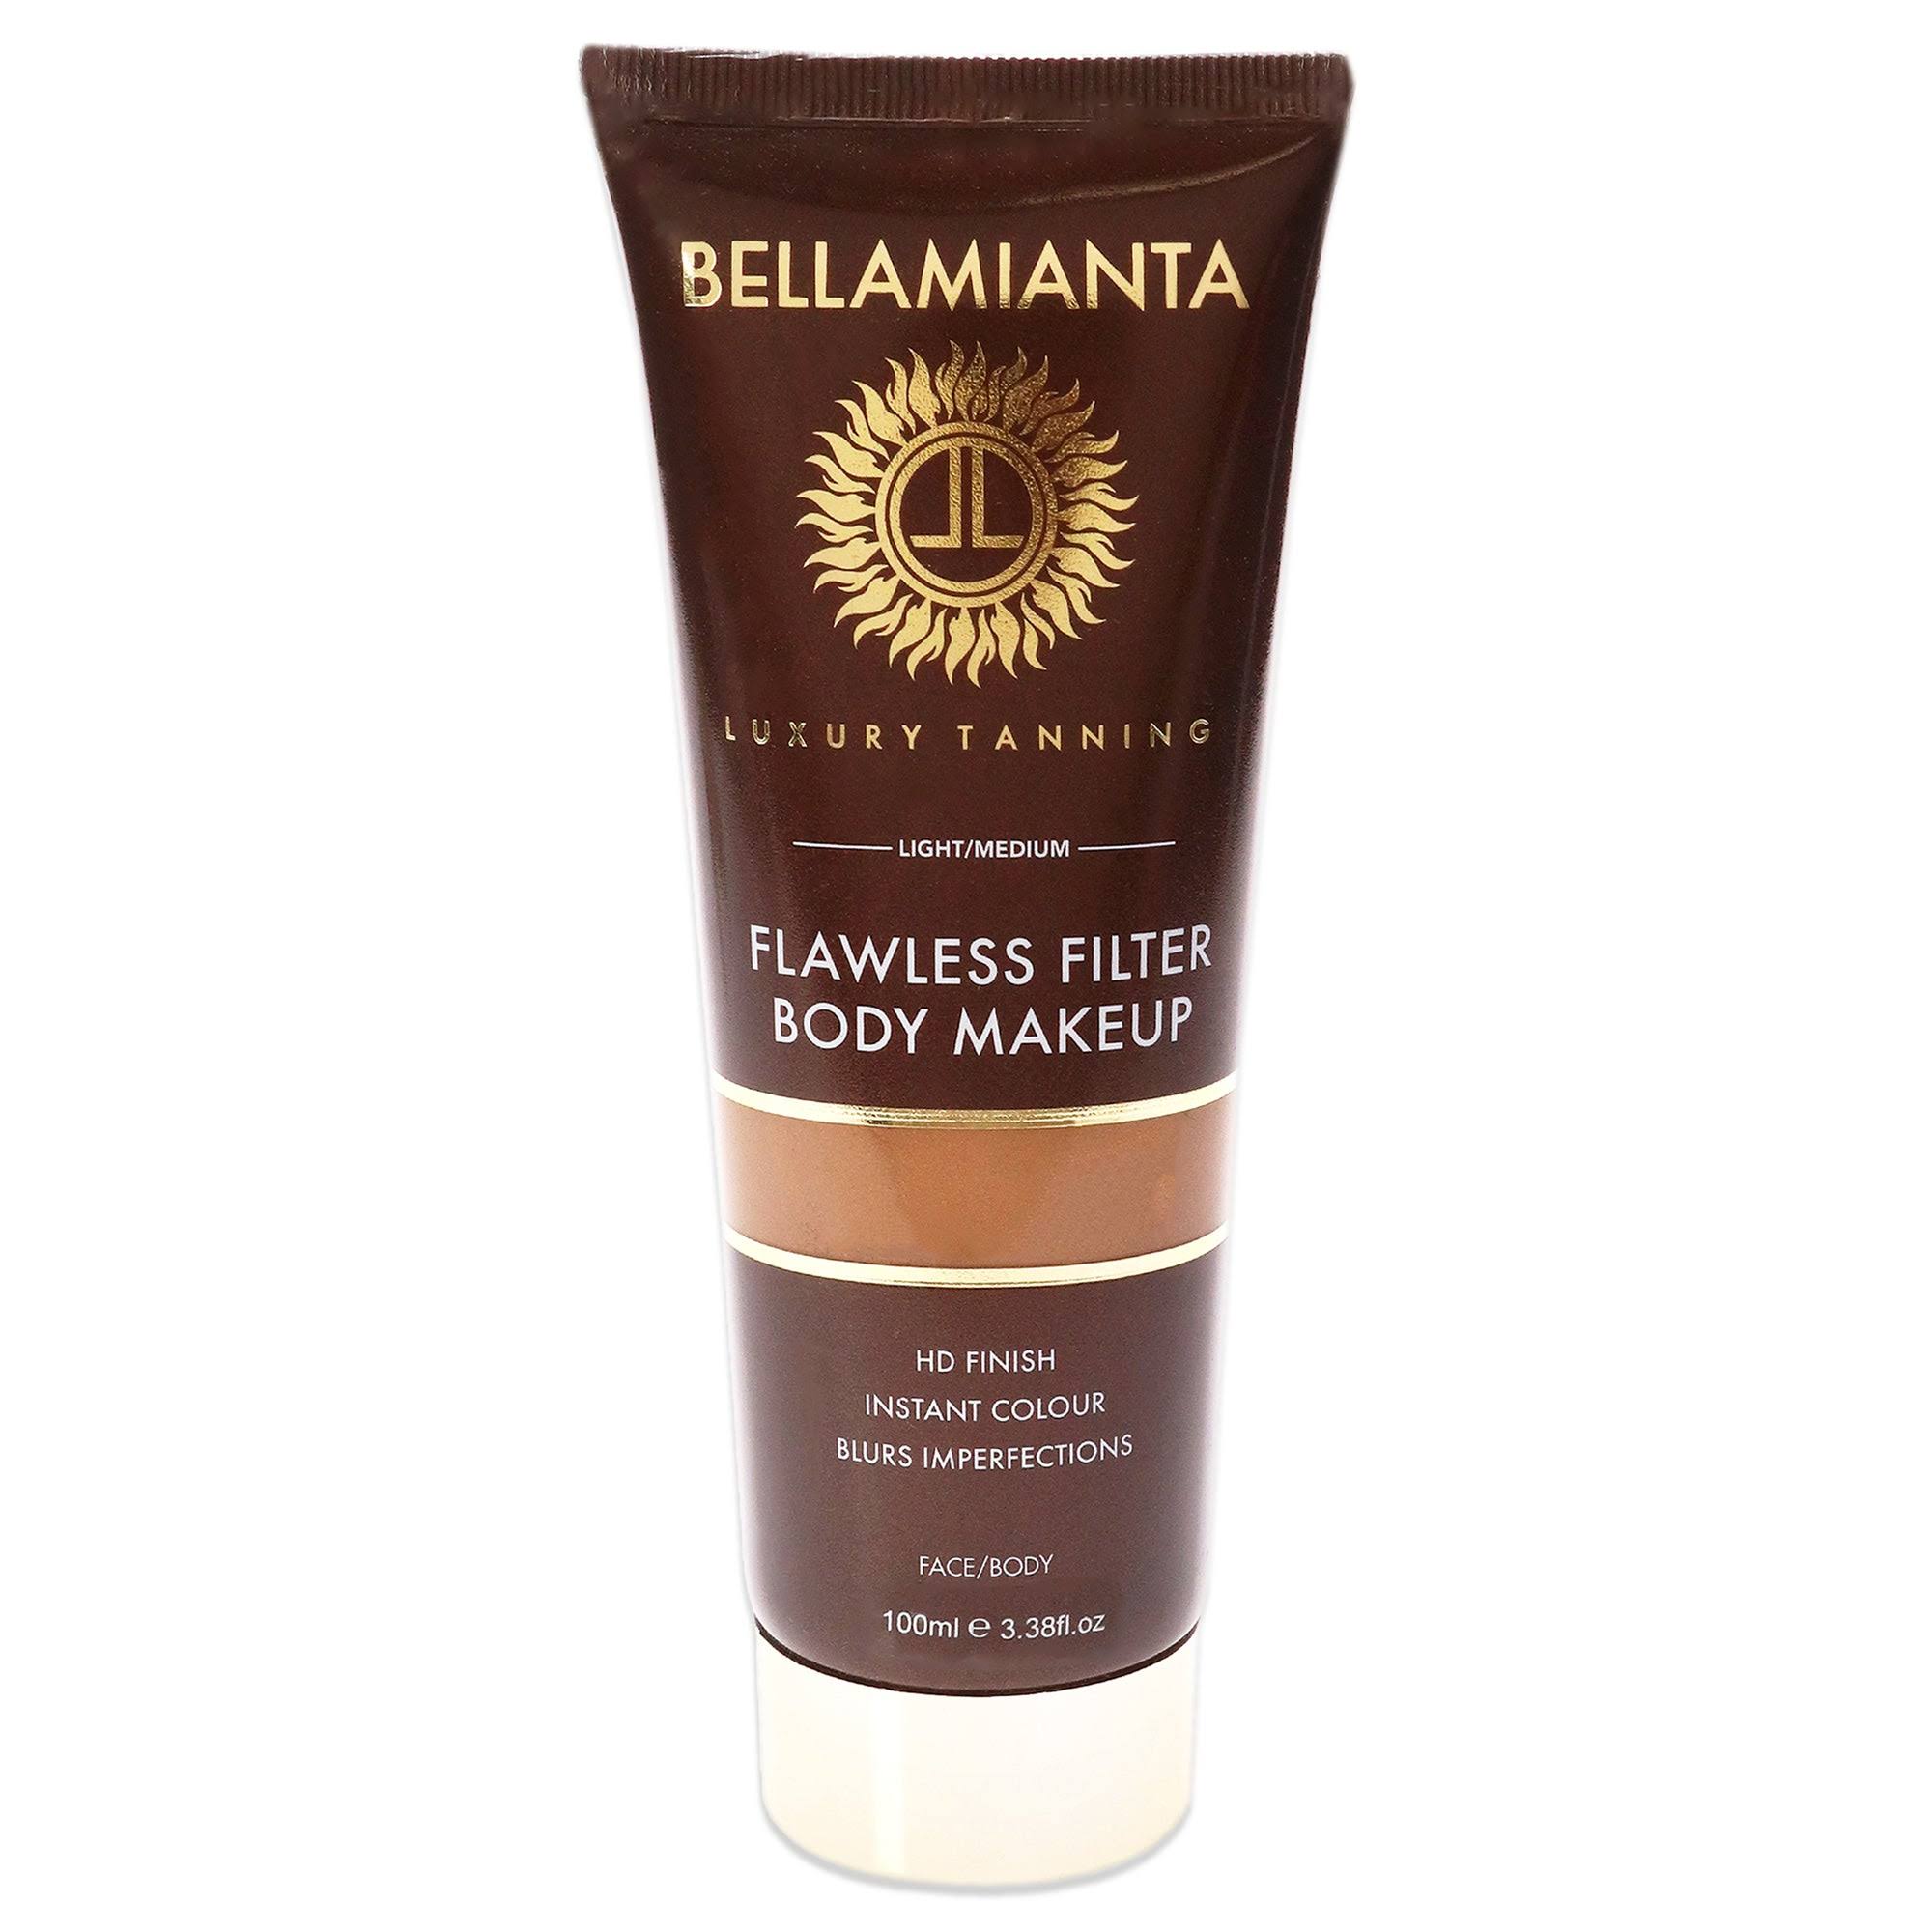 Bellamianta Flawless Filter Body Makeup - Light/Medium